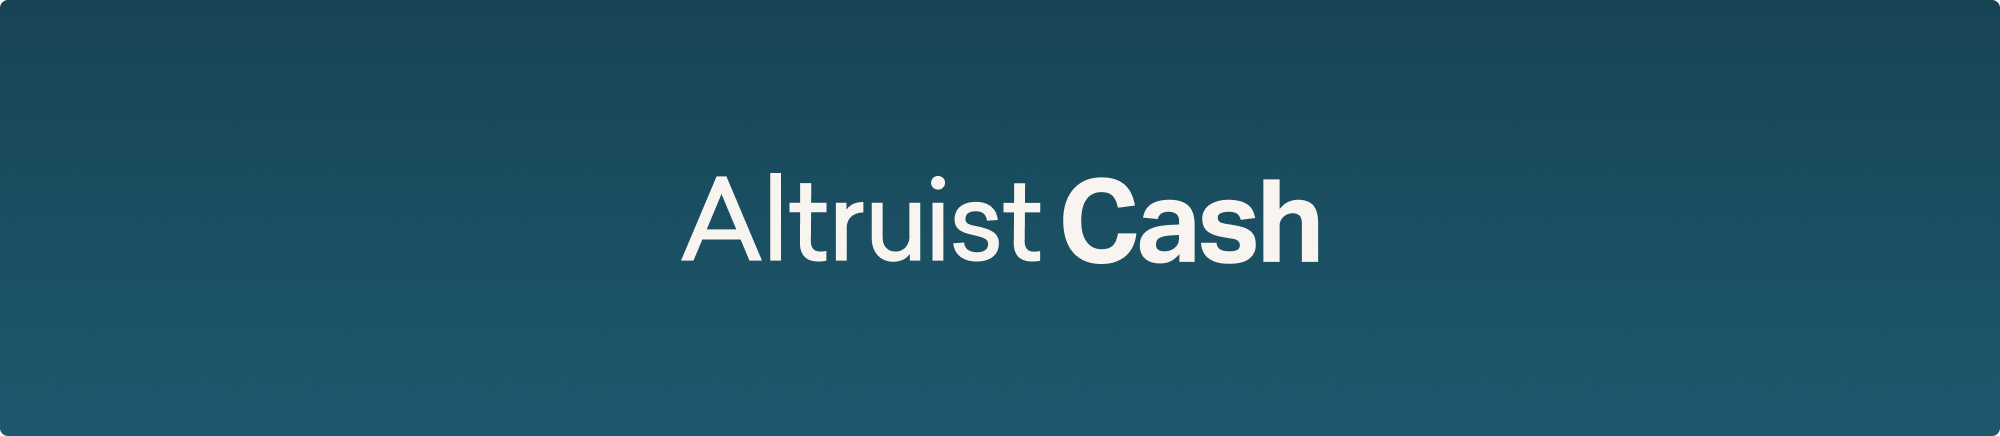 Altruist Cash - Registration